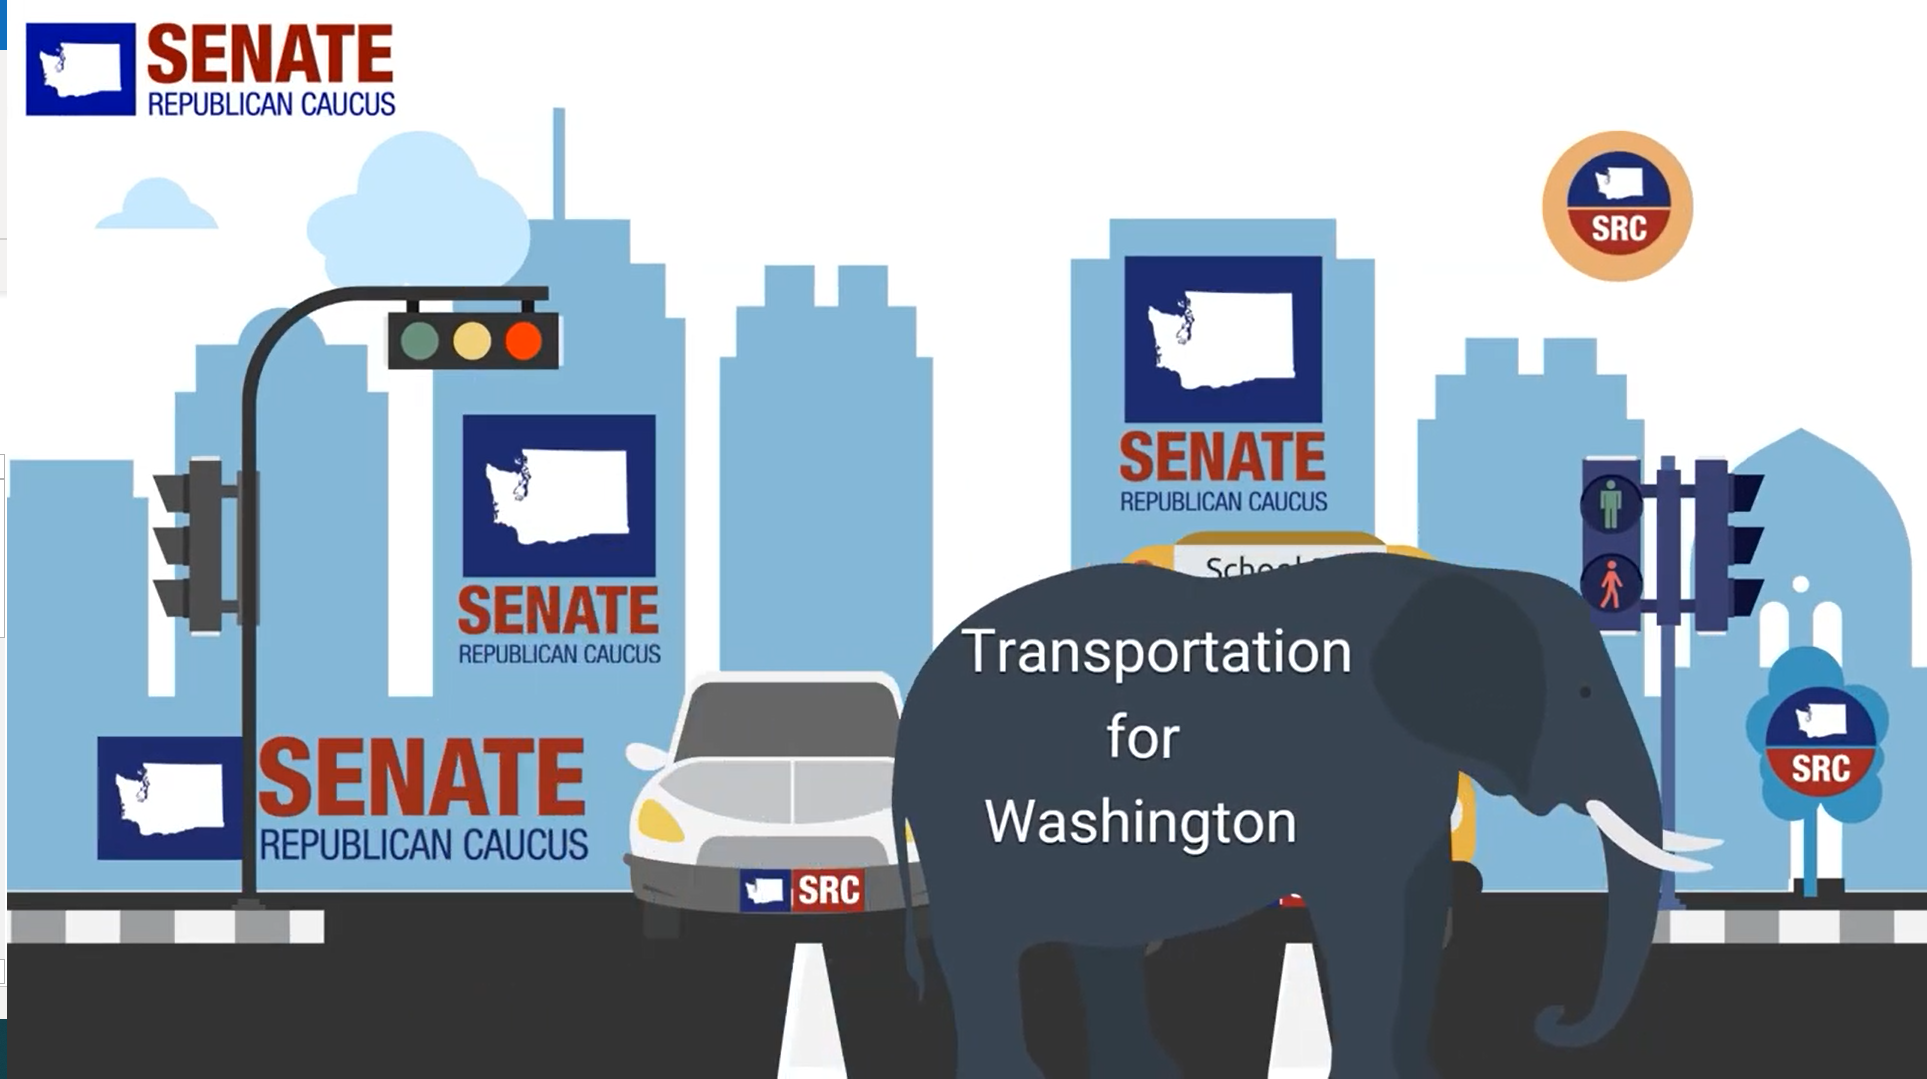 VIDEO: Transportation for Washington